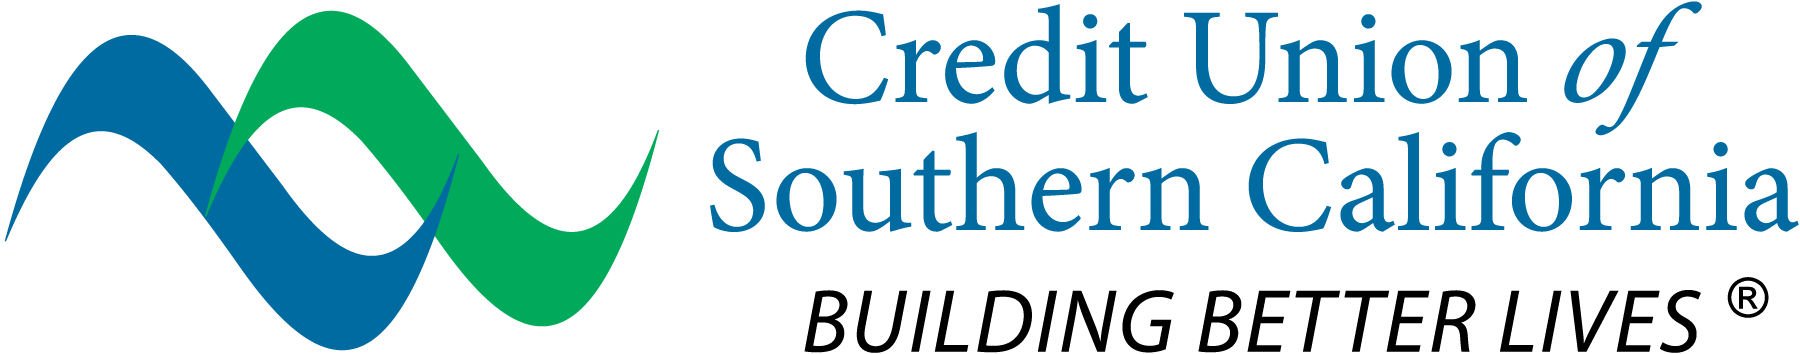 Credit Union of Southern California logo